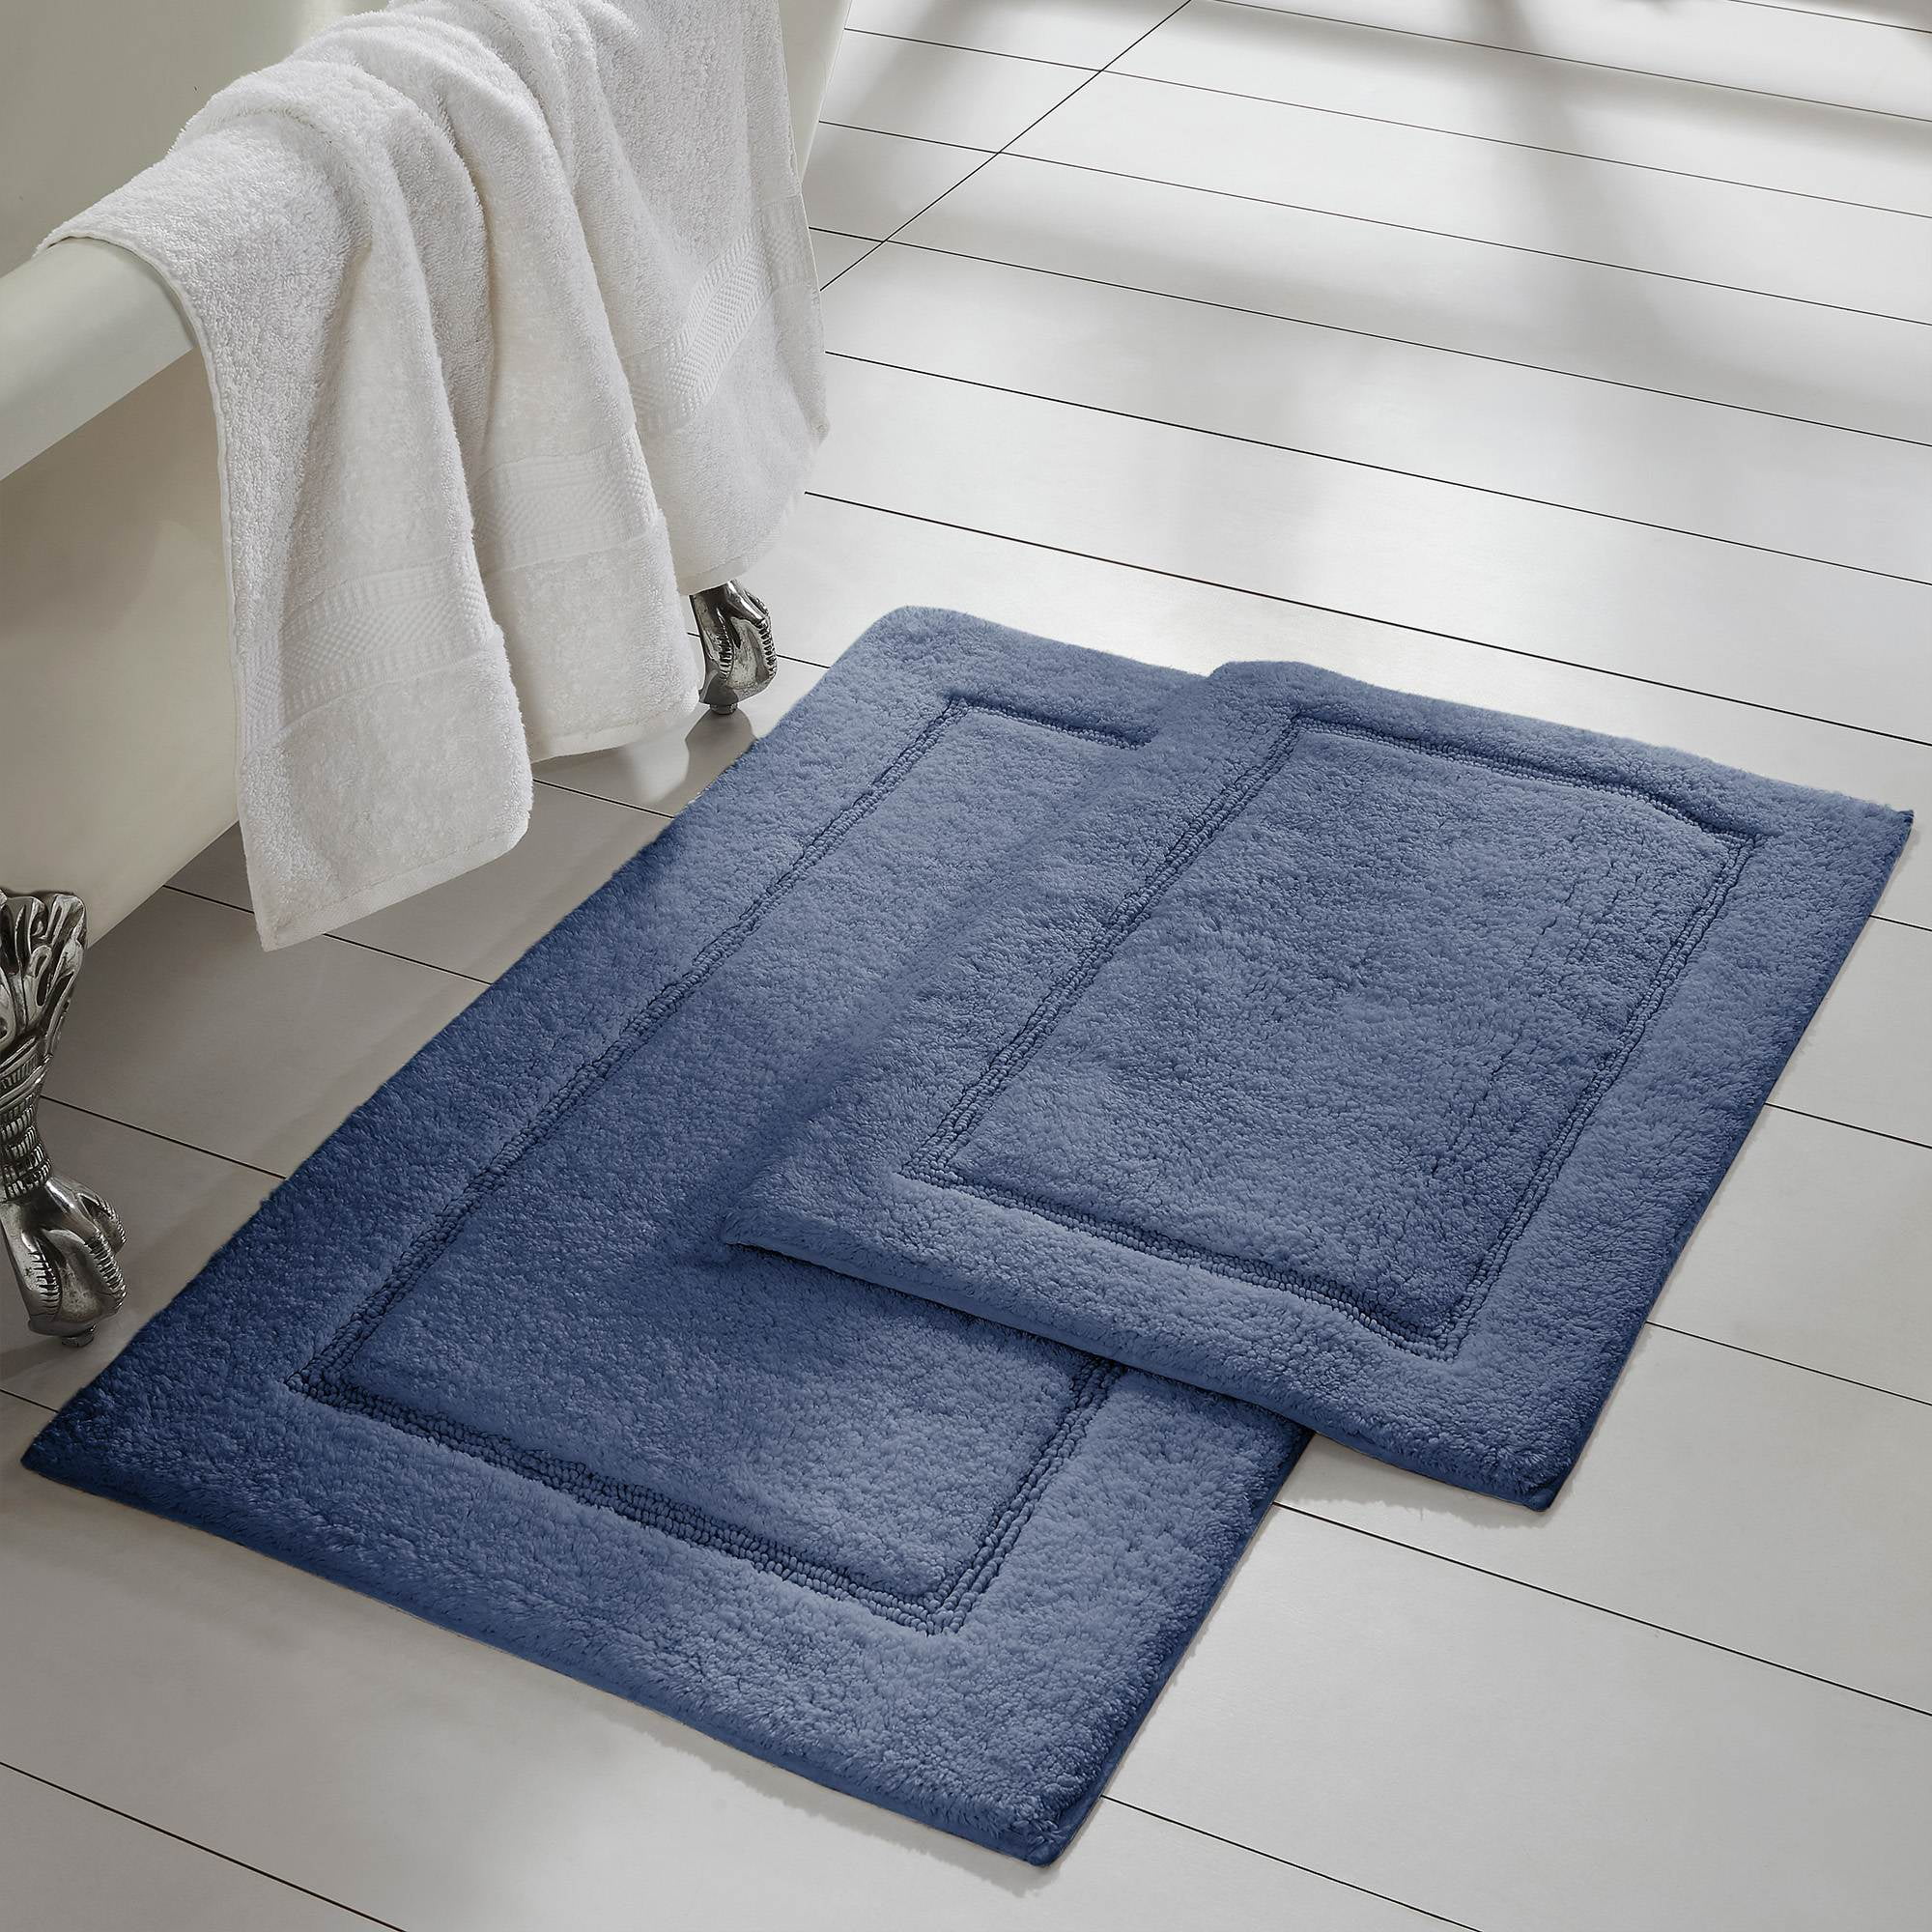 Non-Slip Absorbent Bath Rug Mat For Bathroom Floor Towel Bath Mat,100% Cotton